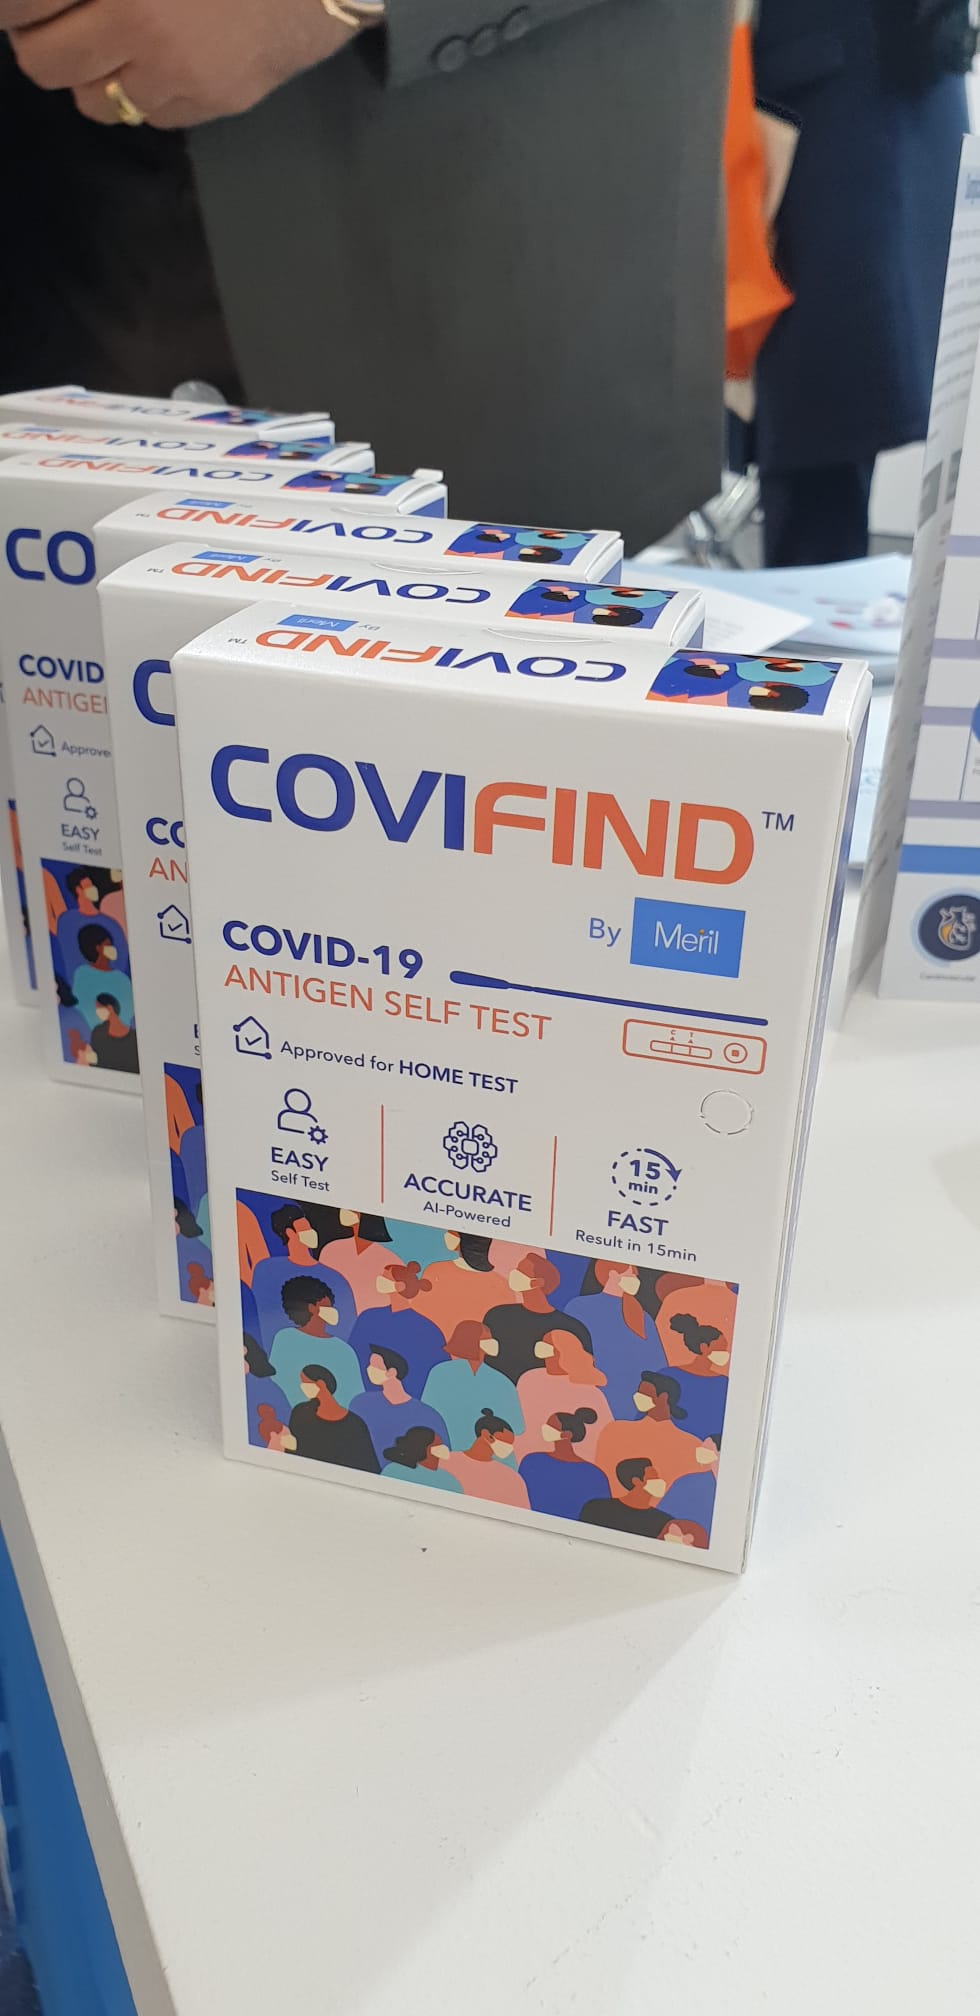 COVID-19 Antigen Self Test